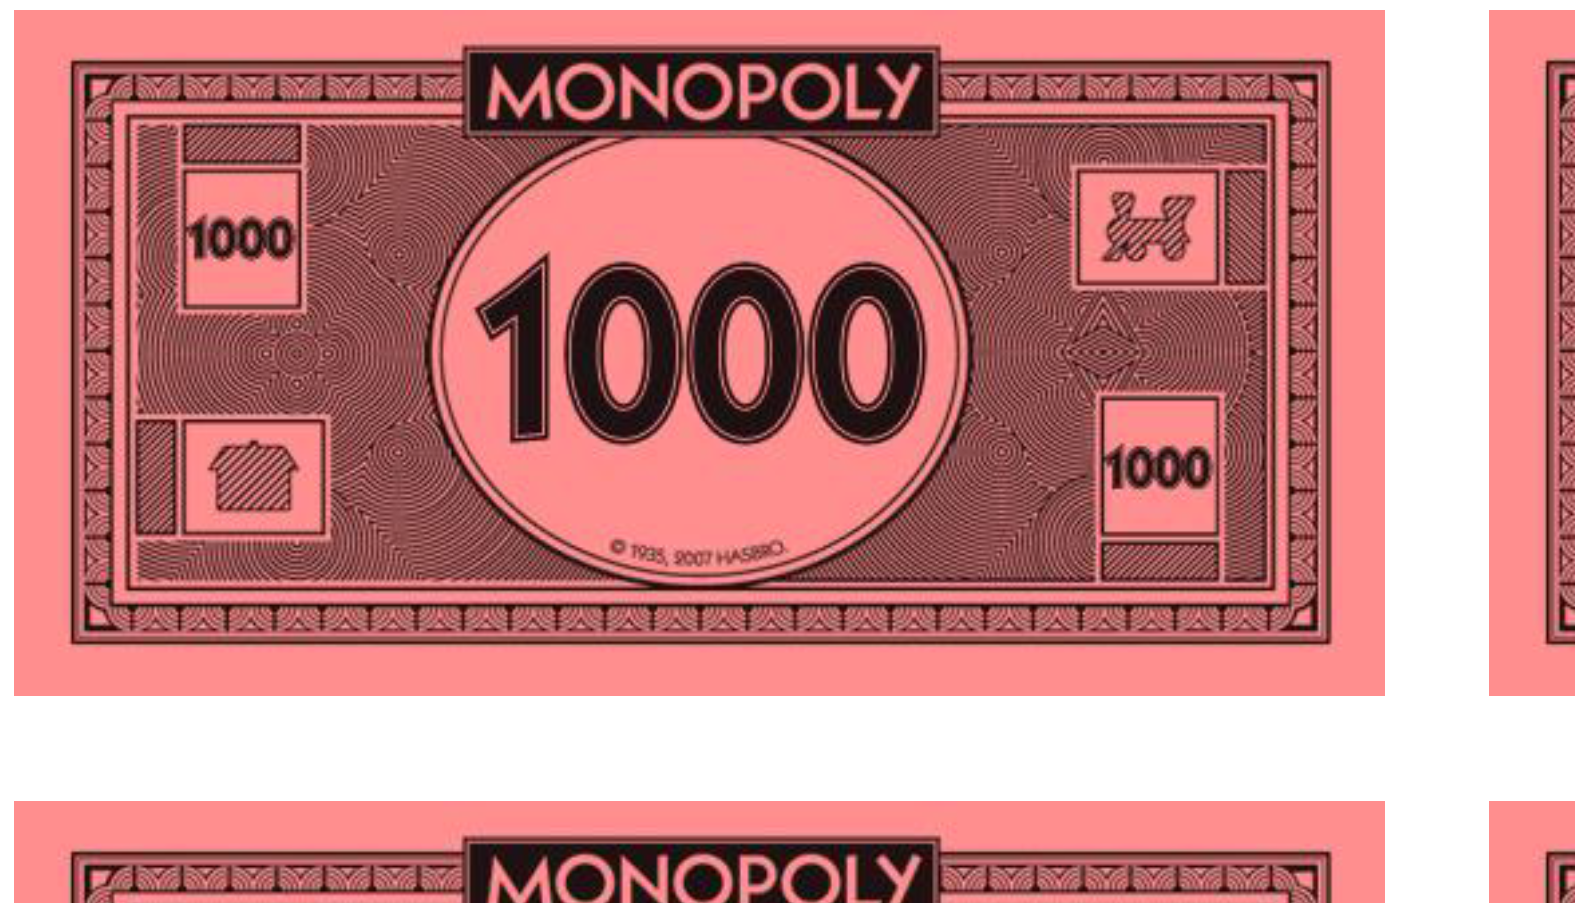 Gratis Monopoly Money 1000 Bill